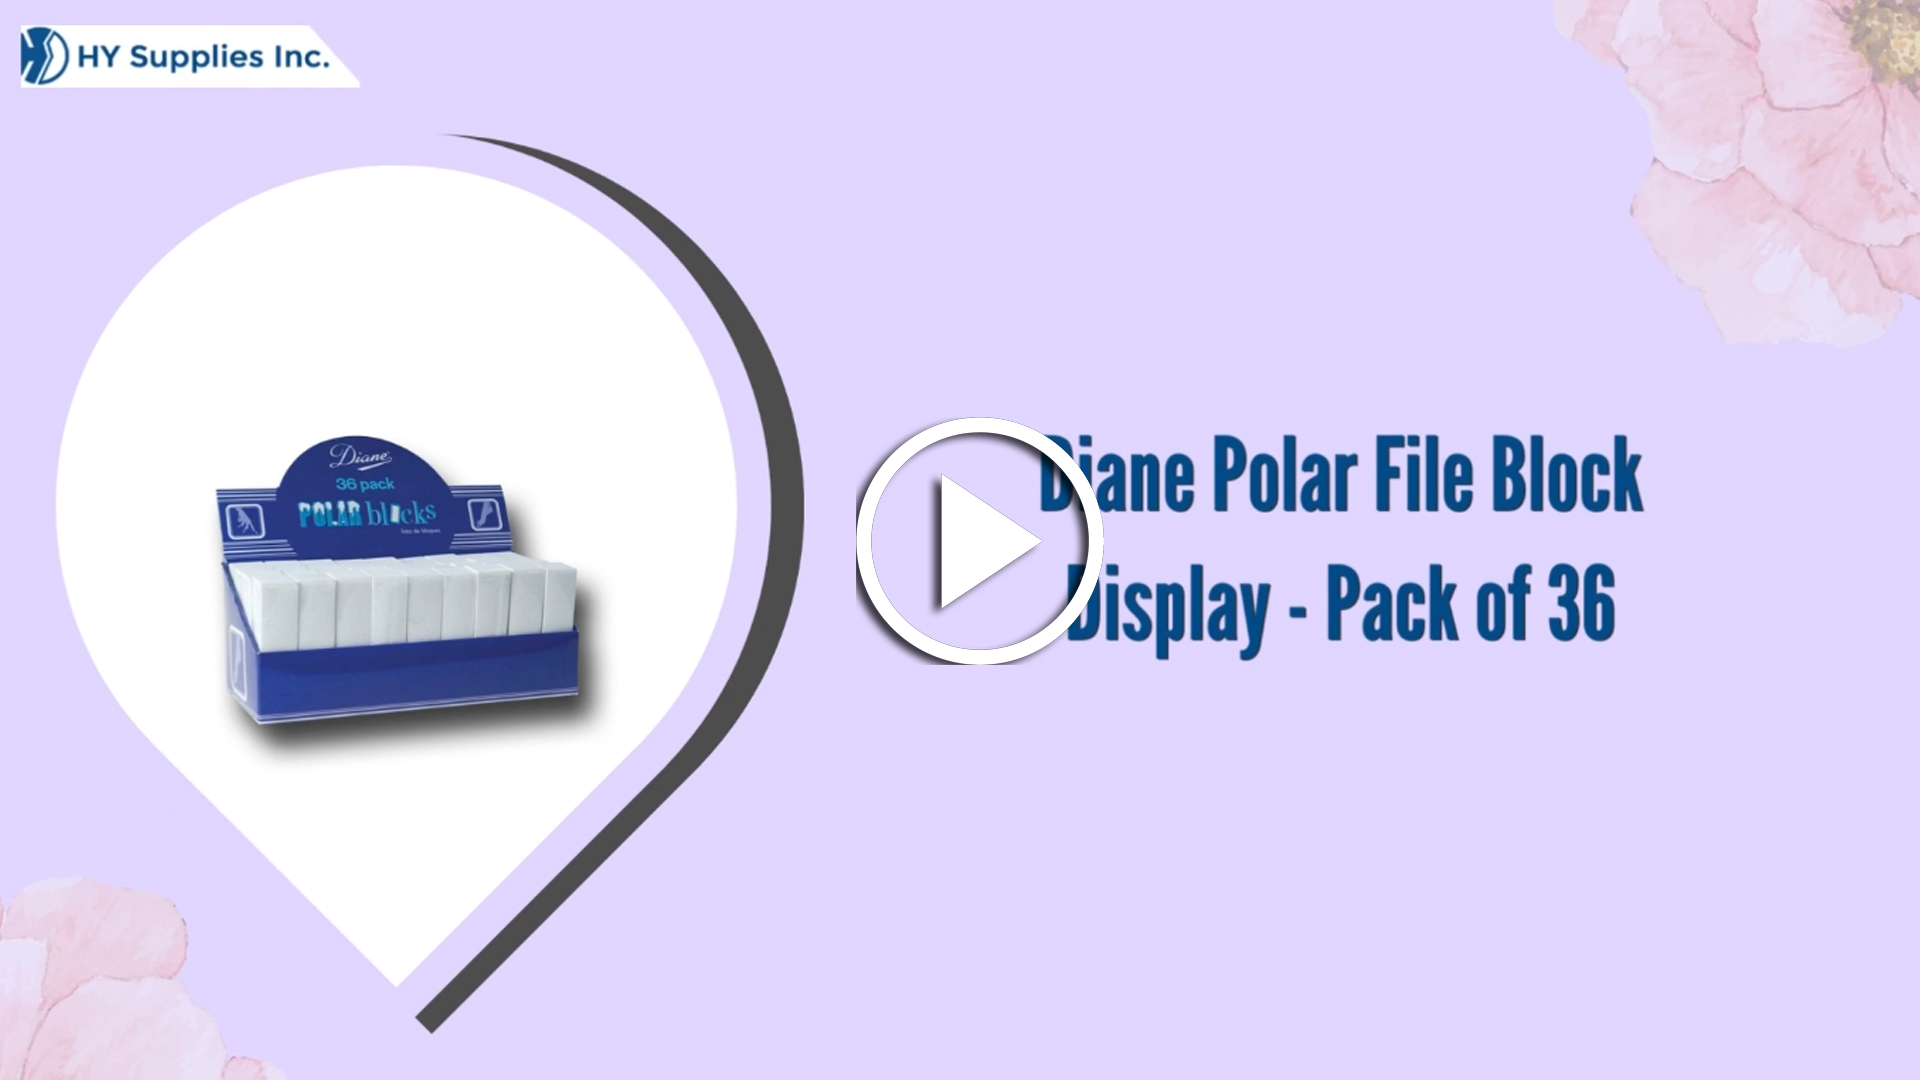 Diane Polar File Block Display - Pack of 36